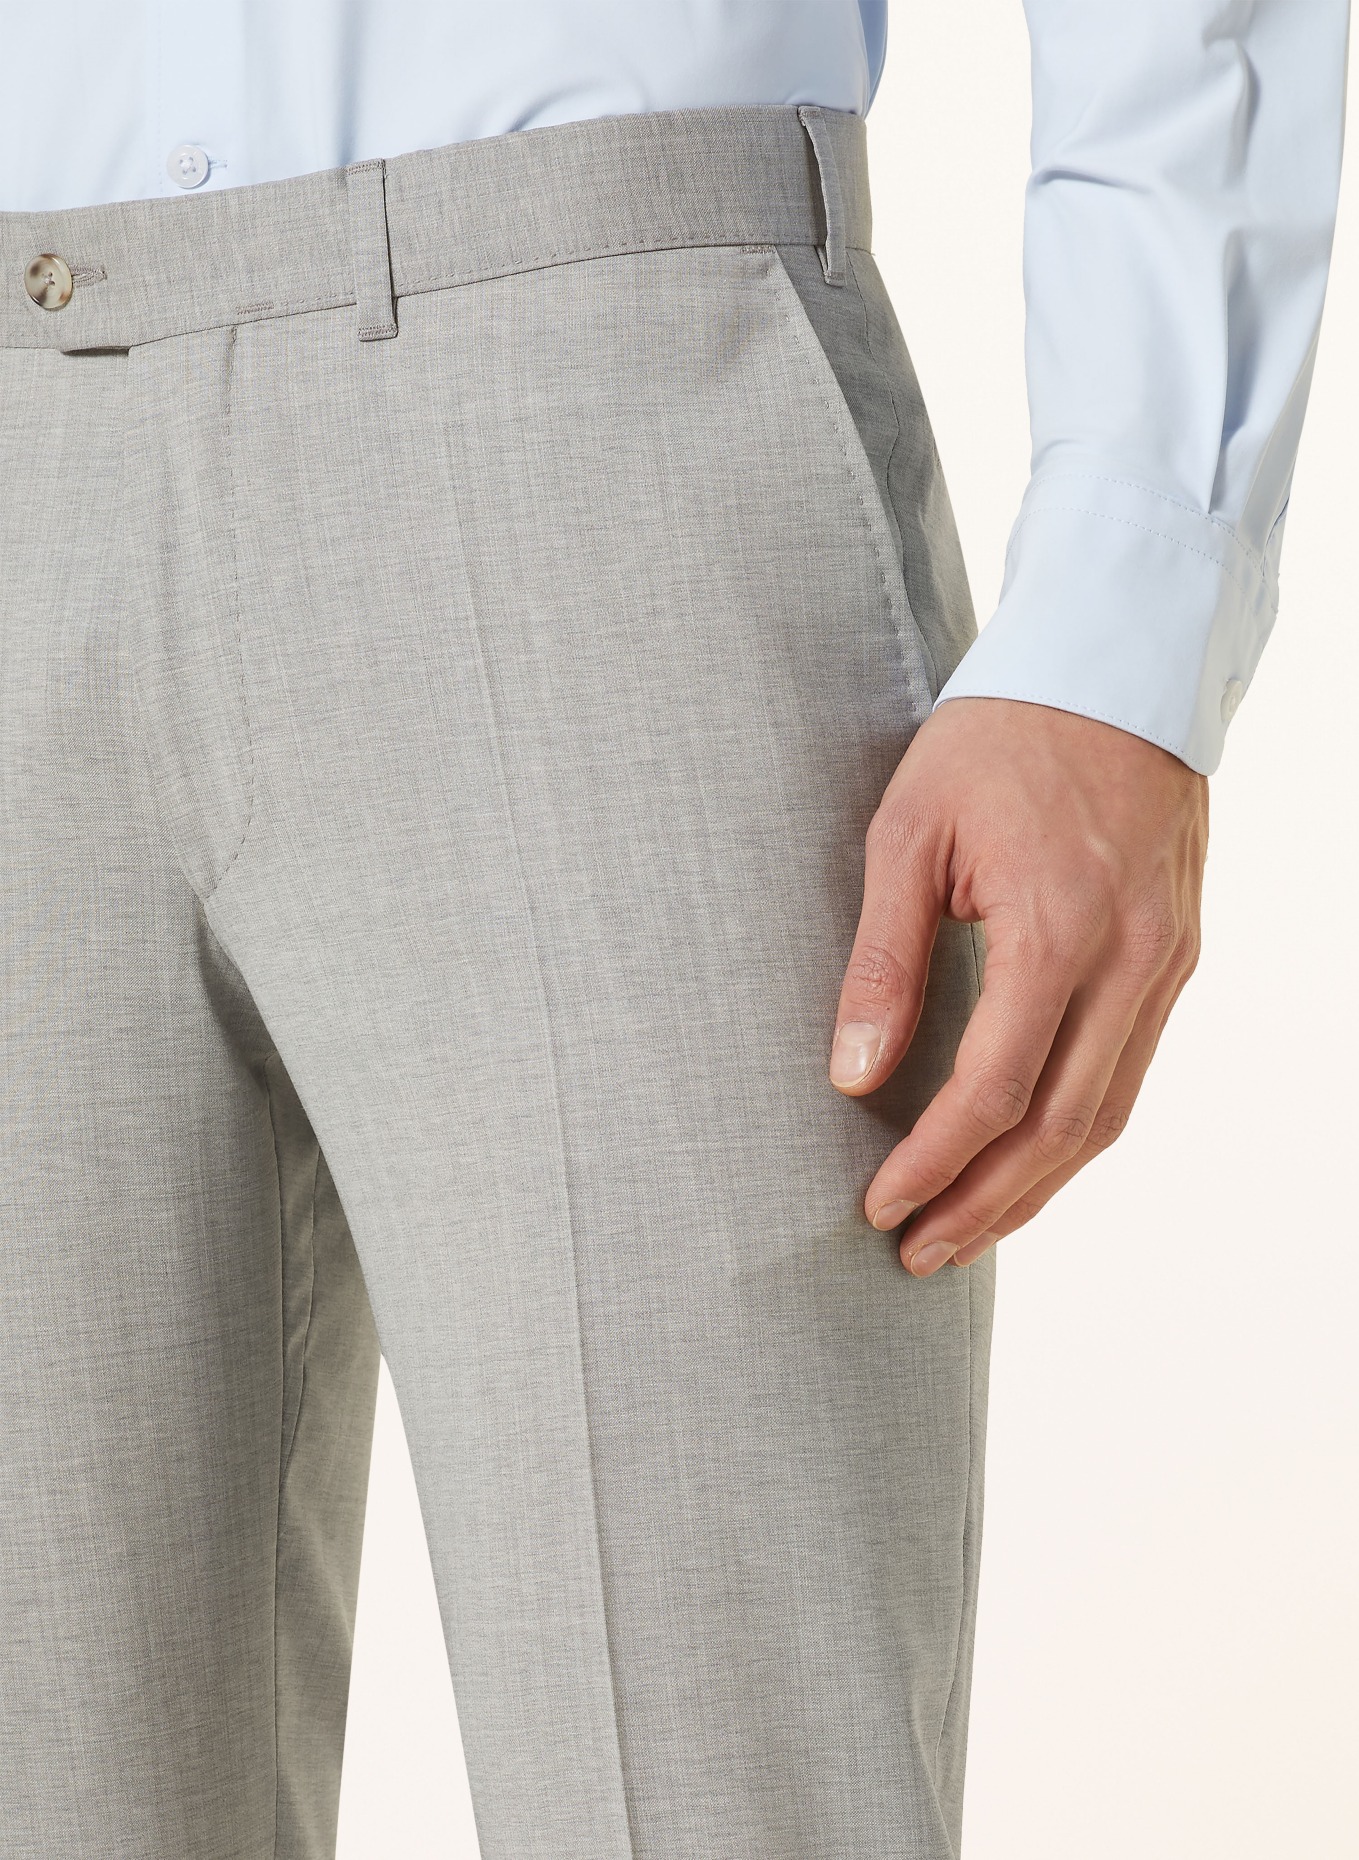 EDUARD DRESSLER Anzughose Shaped Fit, Farbe: 013 HELLGRAU (Bild 6)